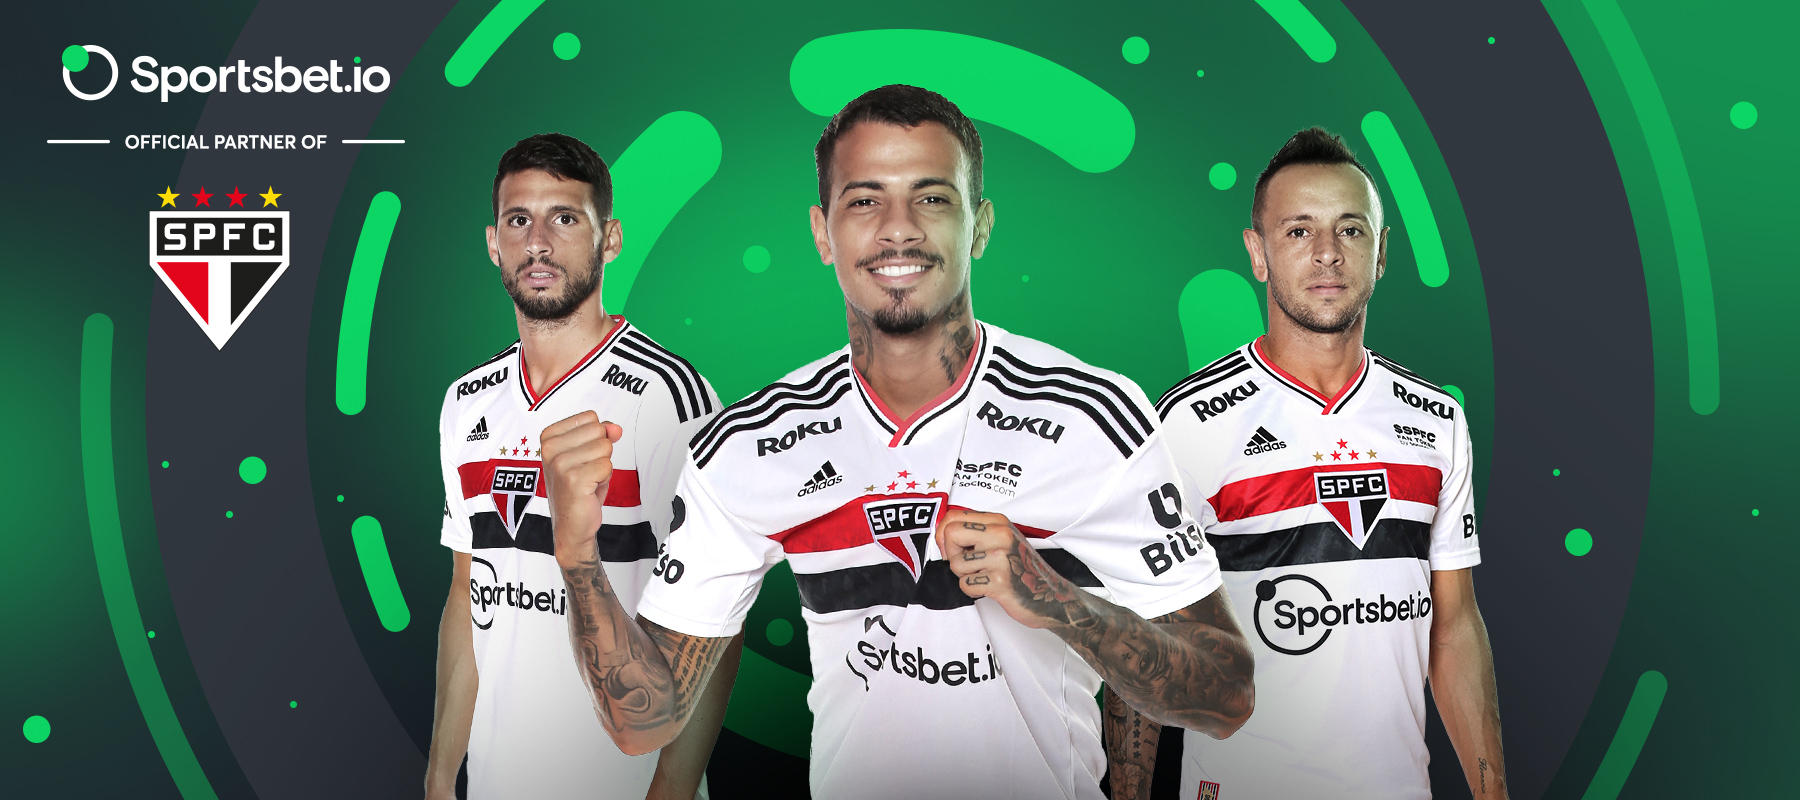 Meet Sportsbet.io partners: São Paulo FC